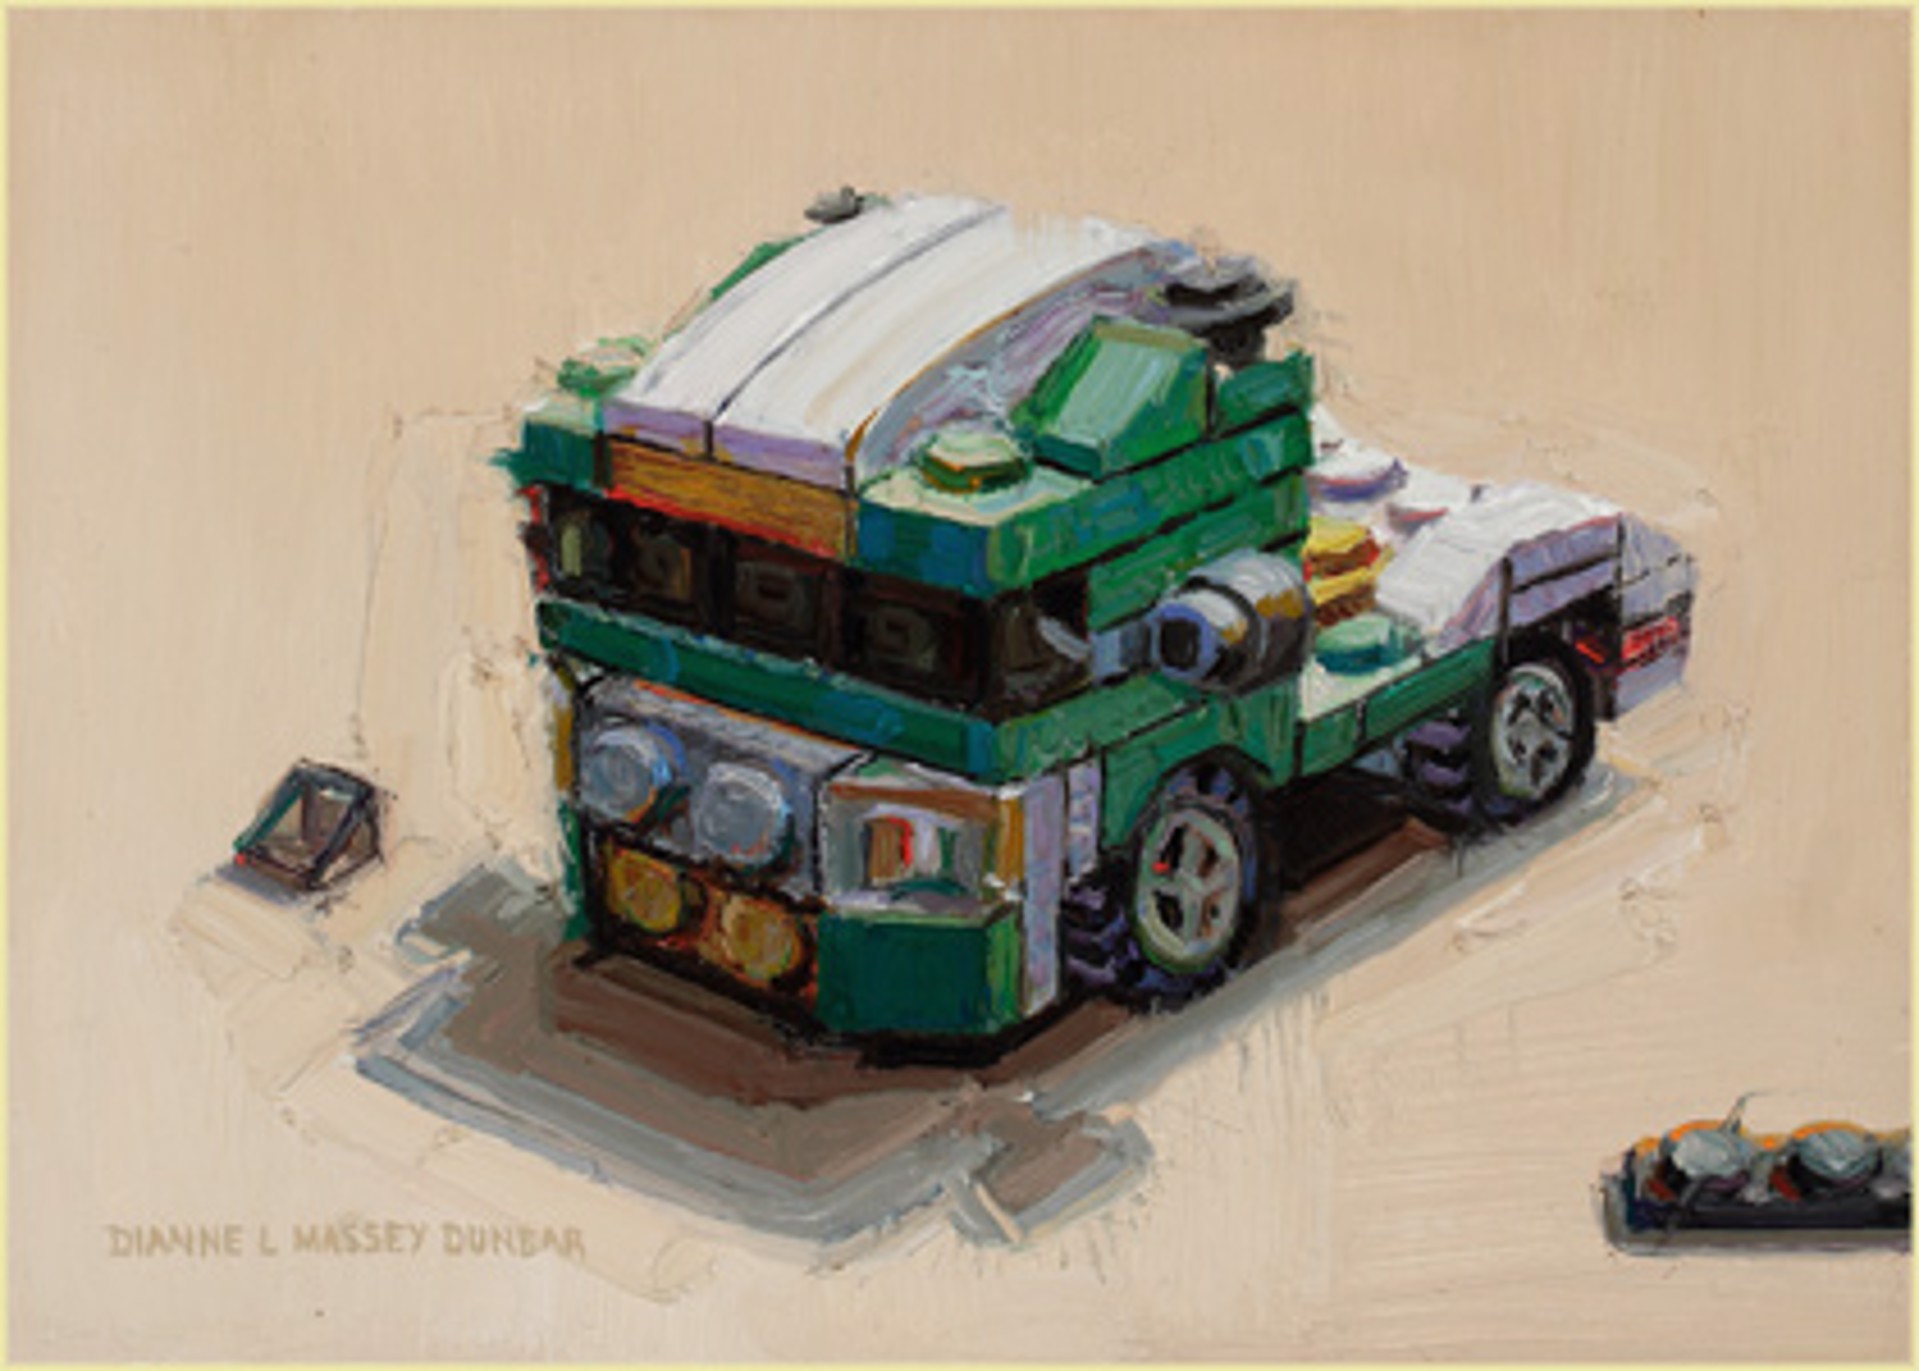 Semi Tractor by Dianne L Massey Dunbar